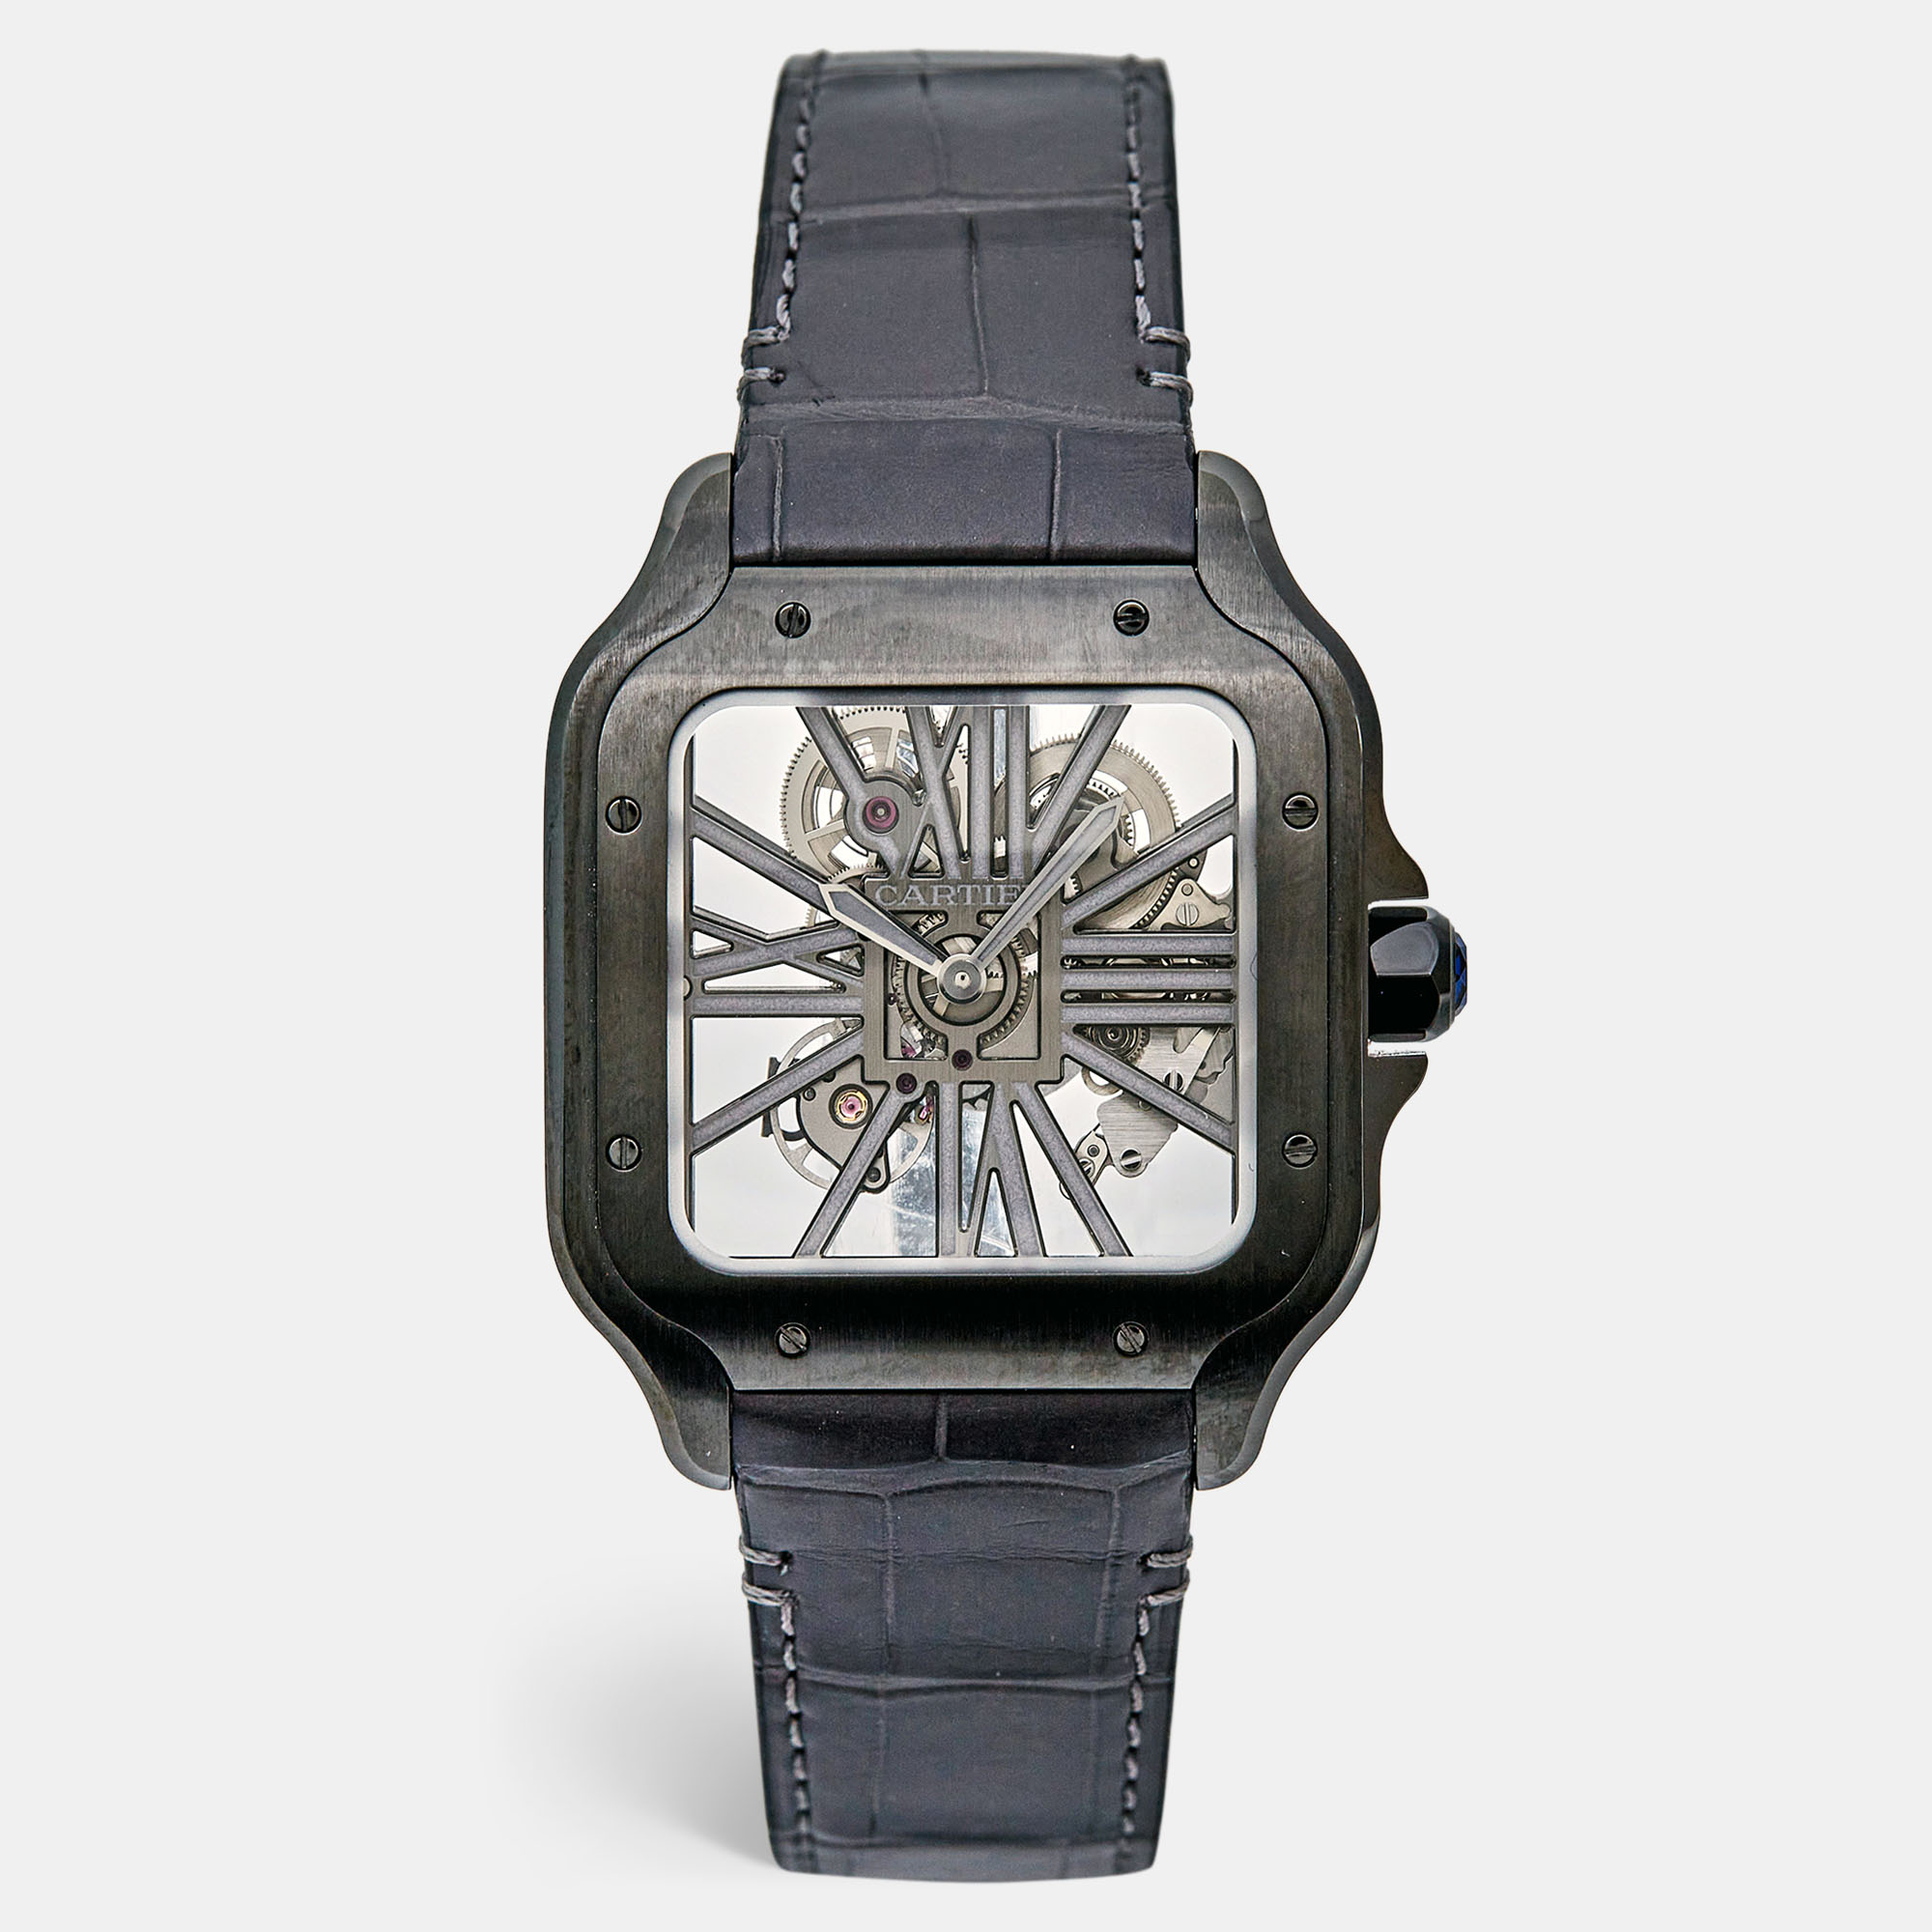 Cartier santos de cartier black steel watch large model whsa0009 men's watch 39.7 mm